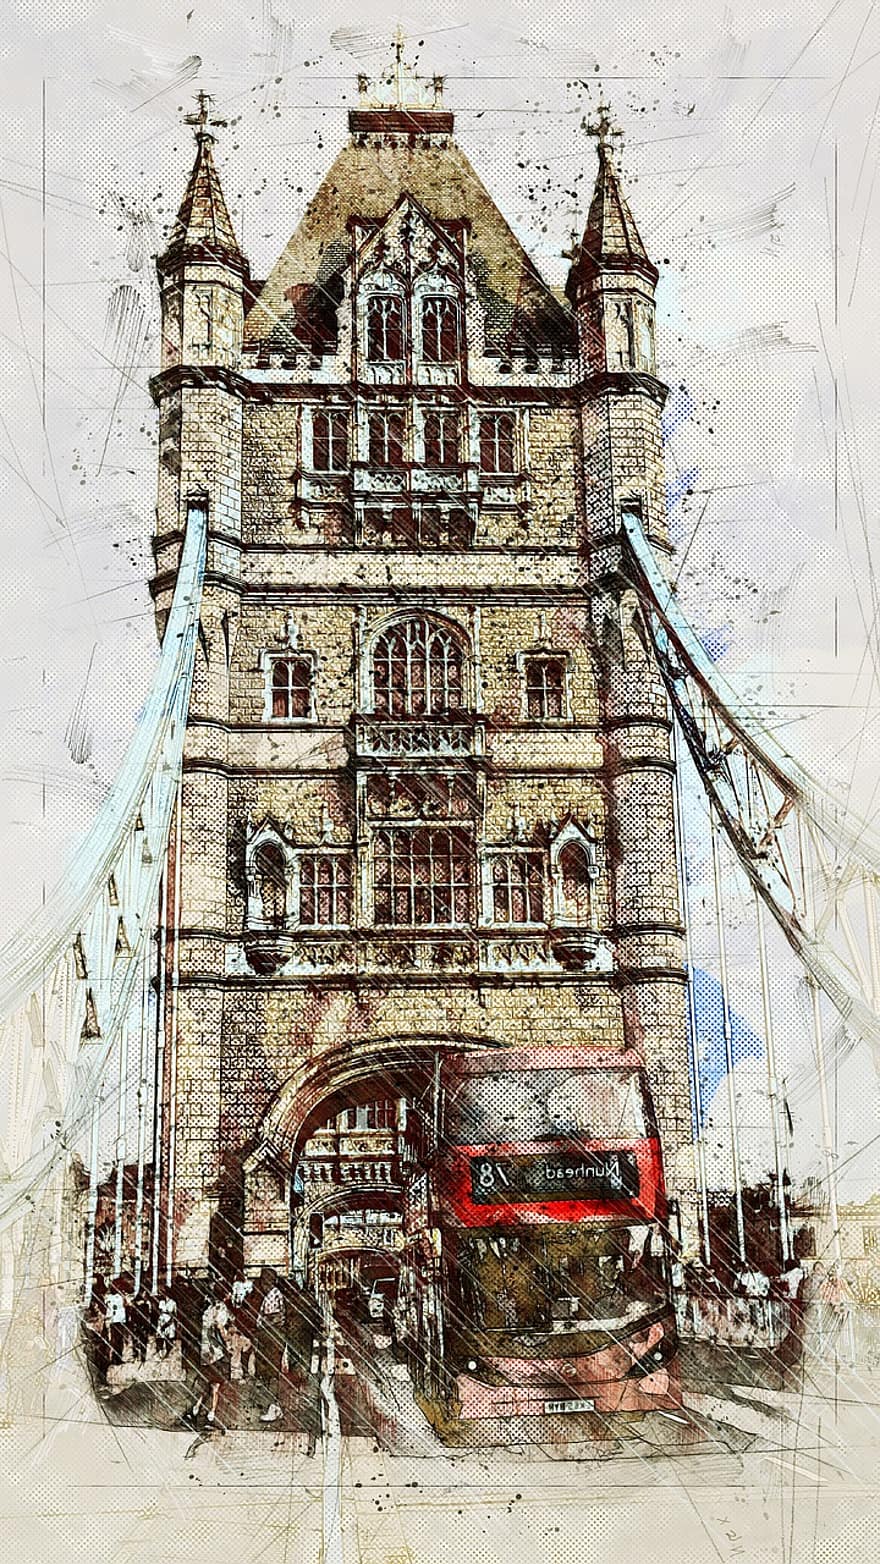 London, Tower, Bridge, Red, Bus, Landmark, City, England, Capital, Thames, River